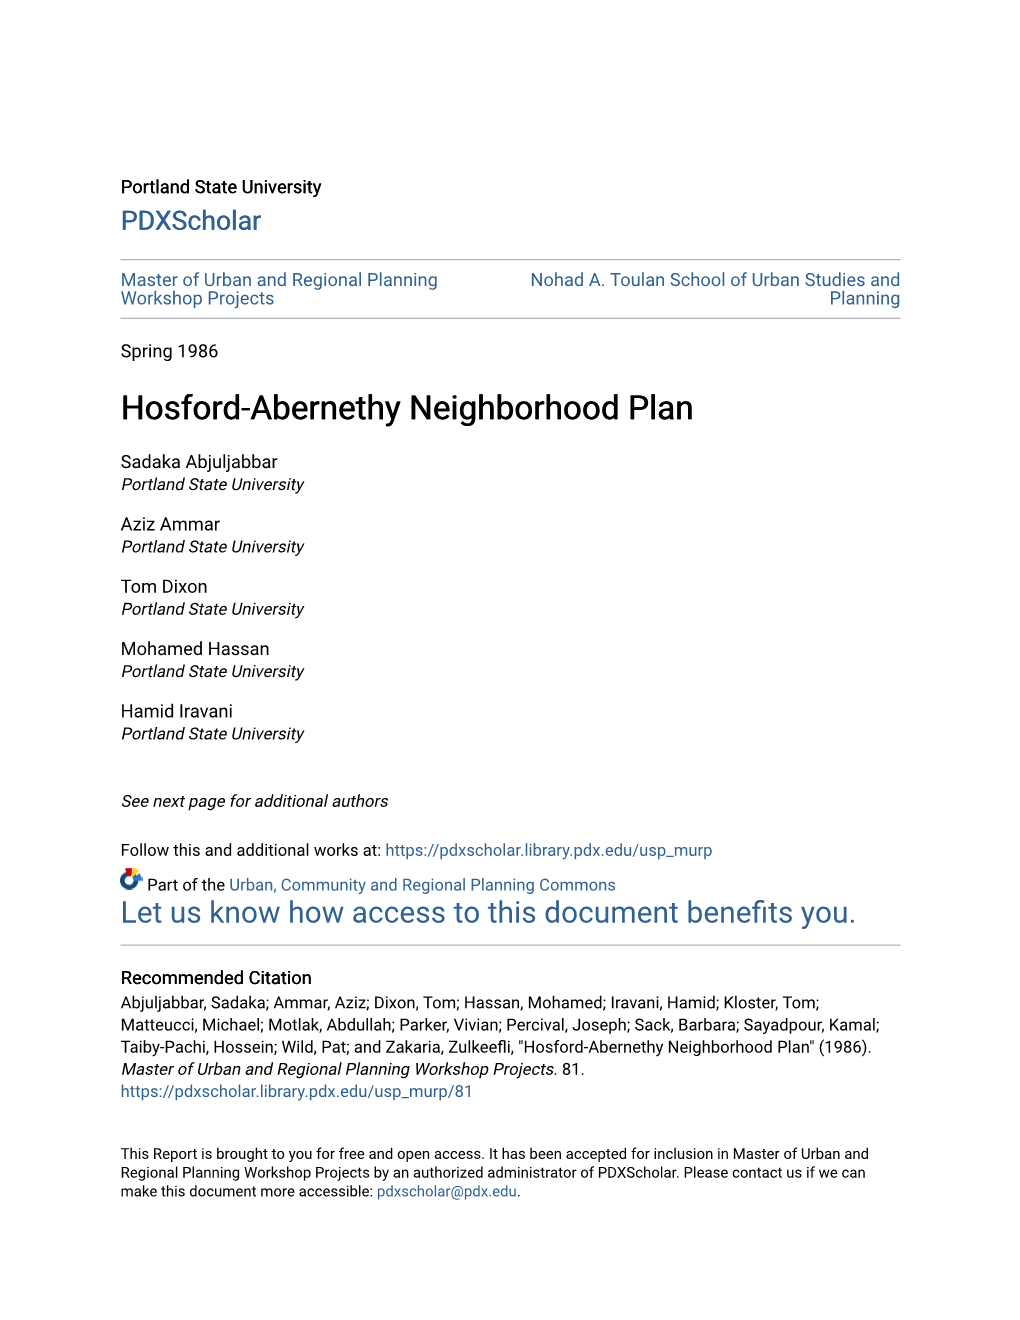 Hosford-Abernethy Neighborhood Plan